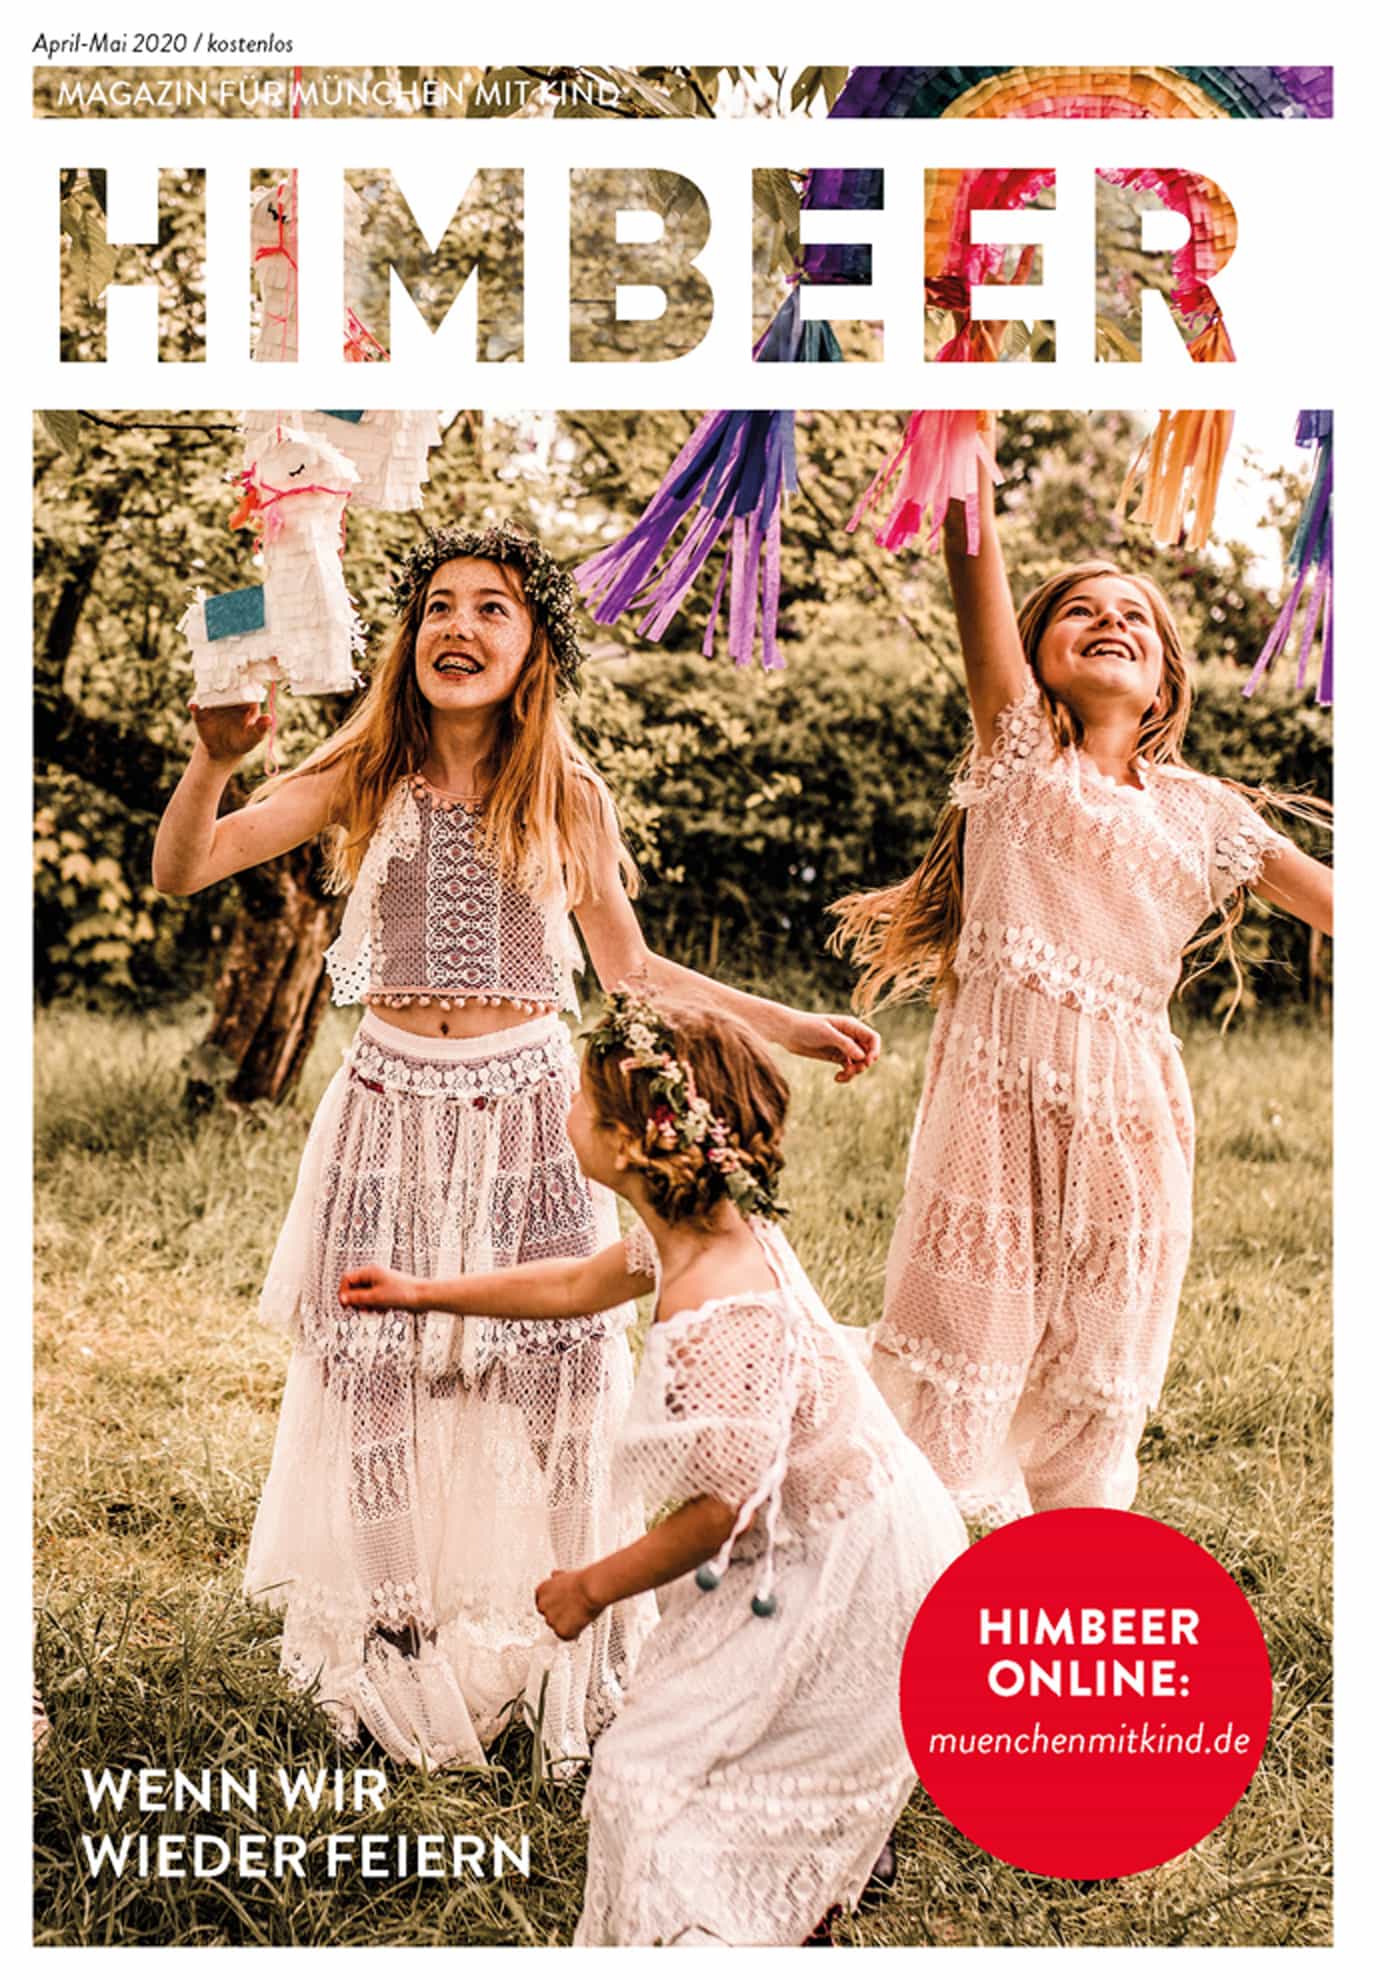 HIMBEER Magazin für München mit Kind April-Mai 2020 // HIMBEER